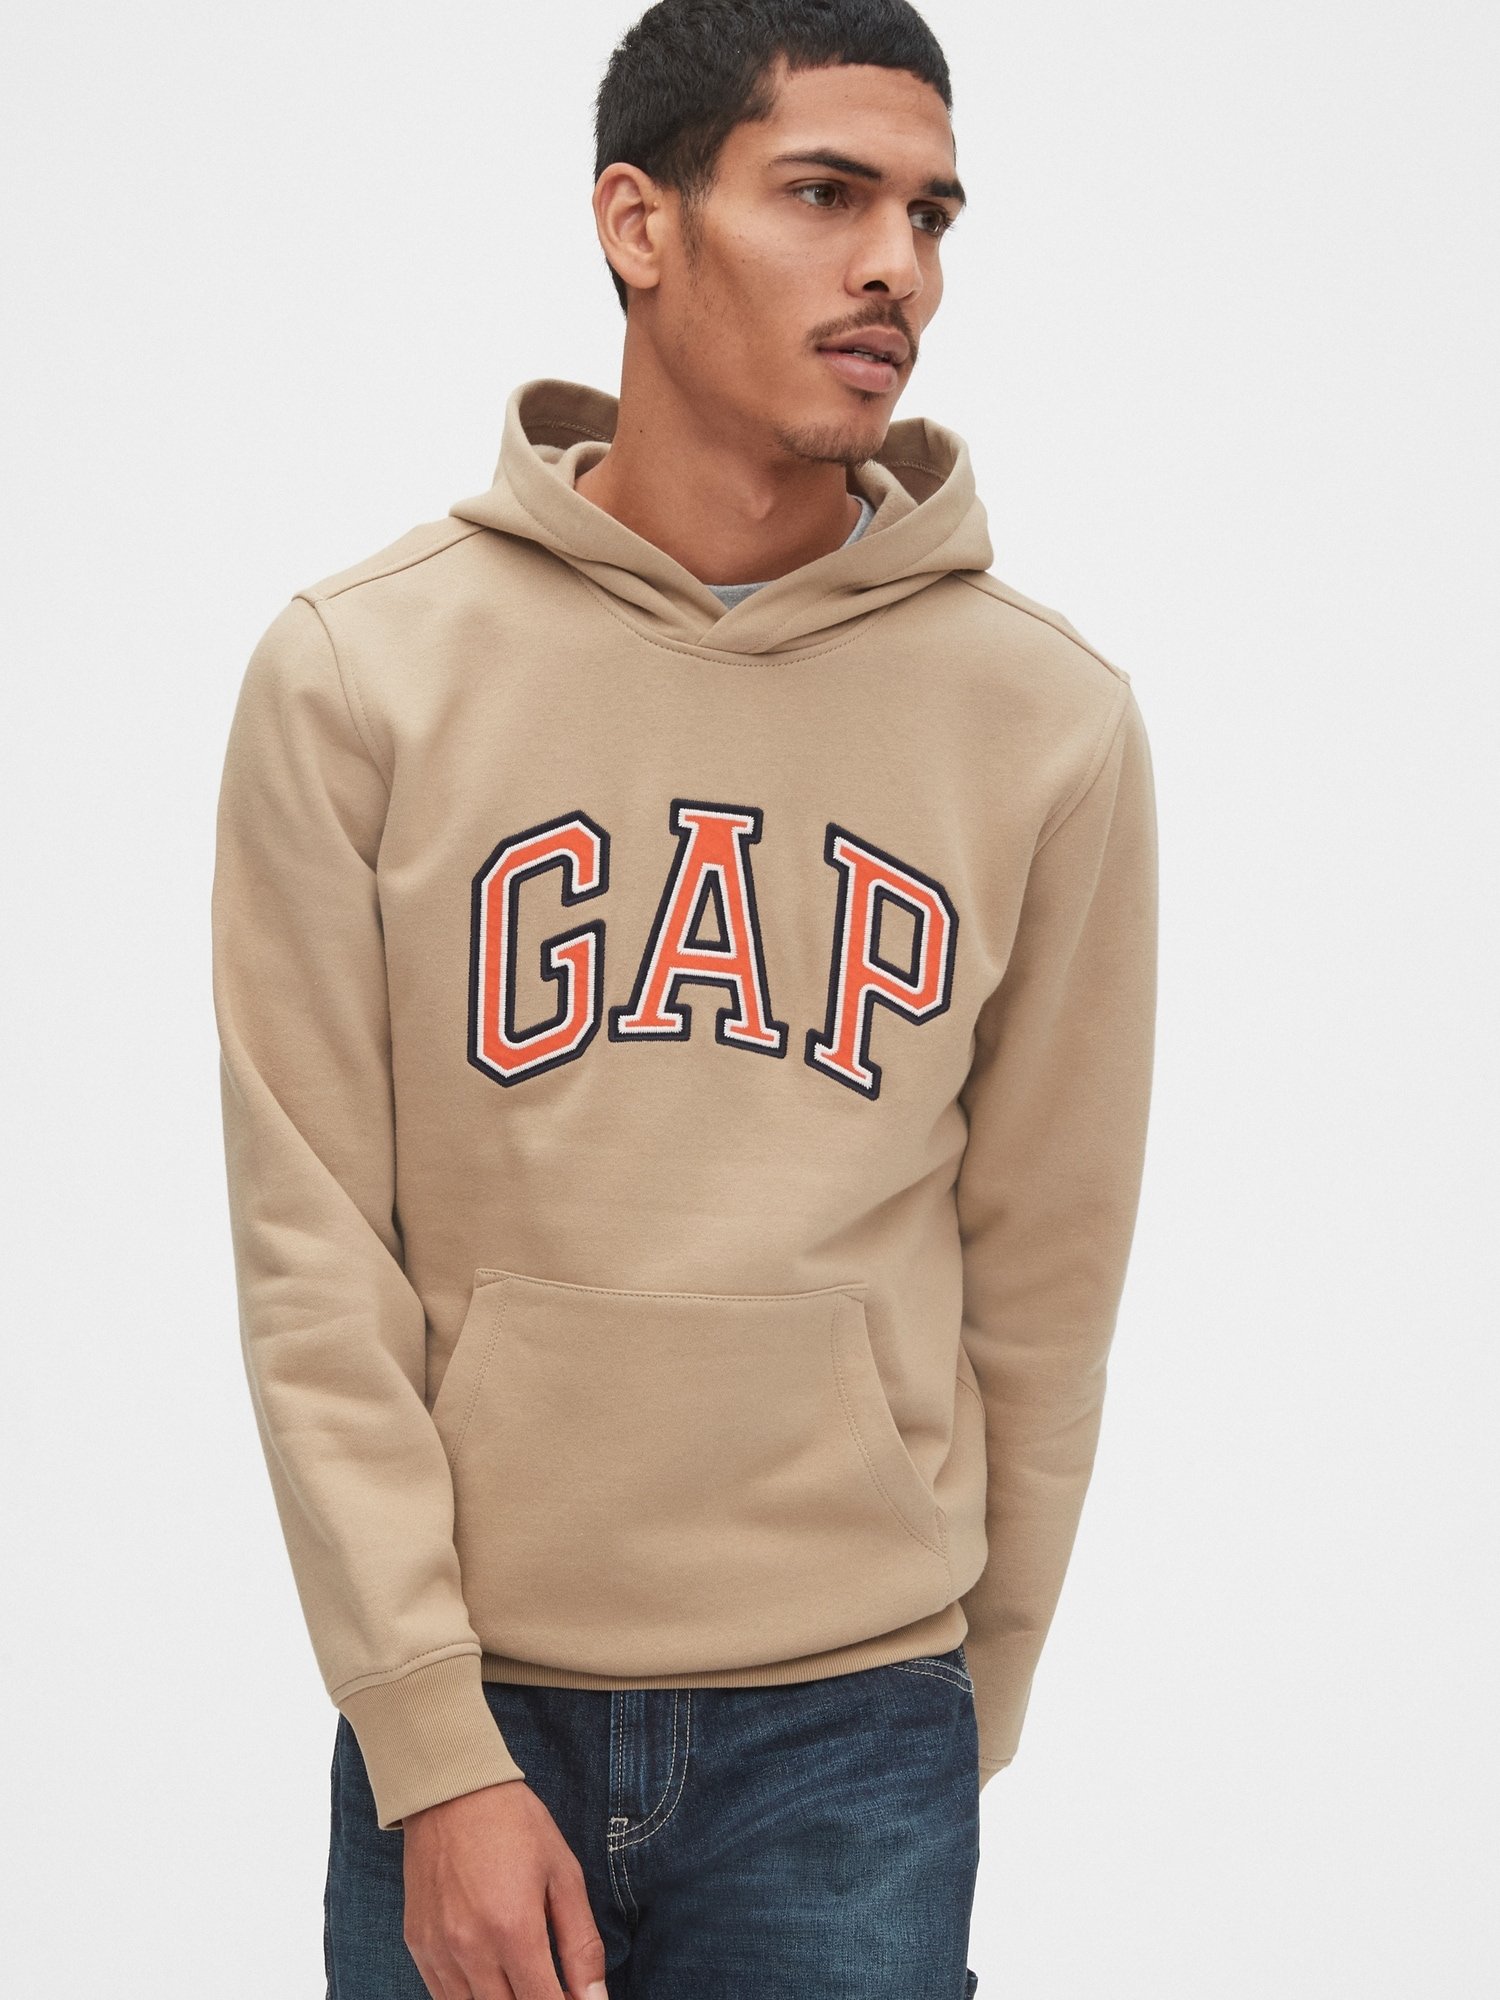 Gap Logo Pullover Kapüşonlu Sweatshirt product image